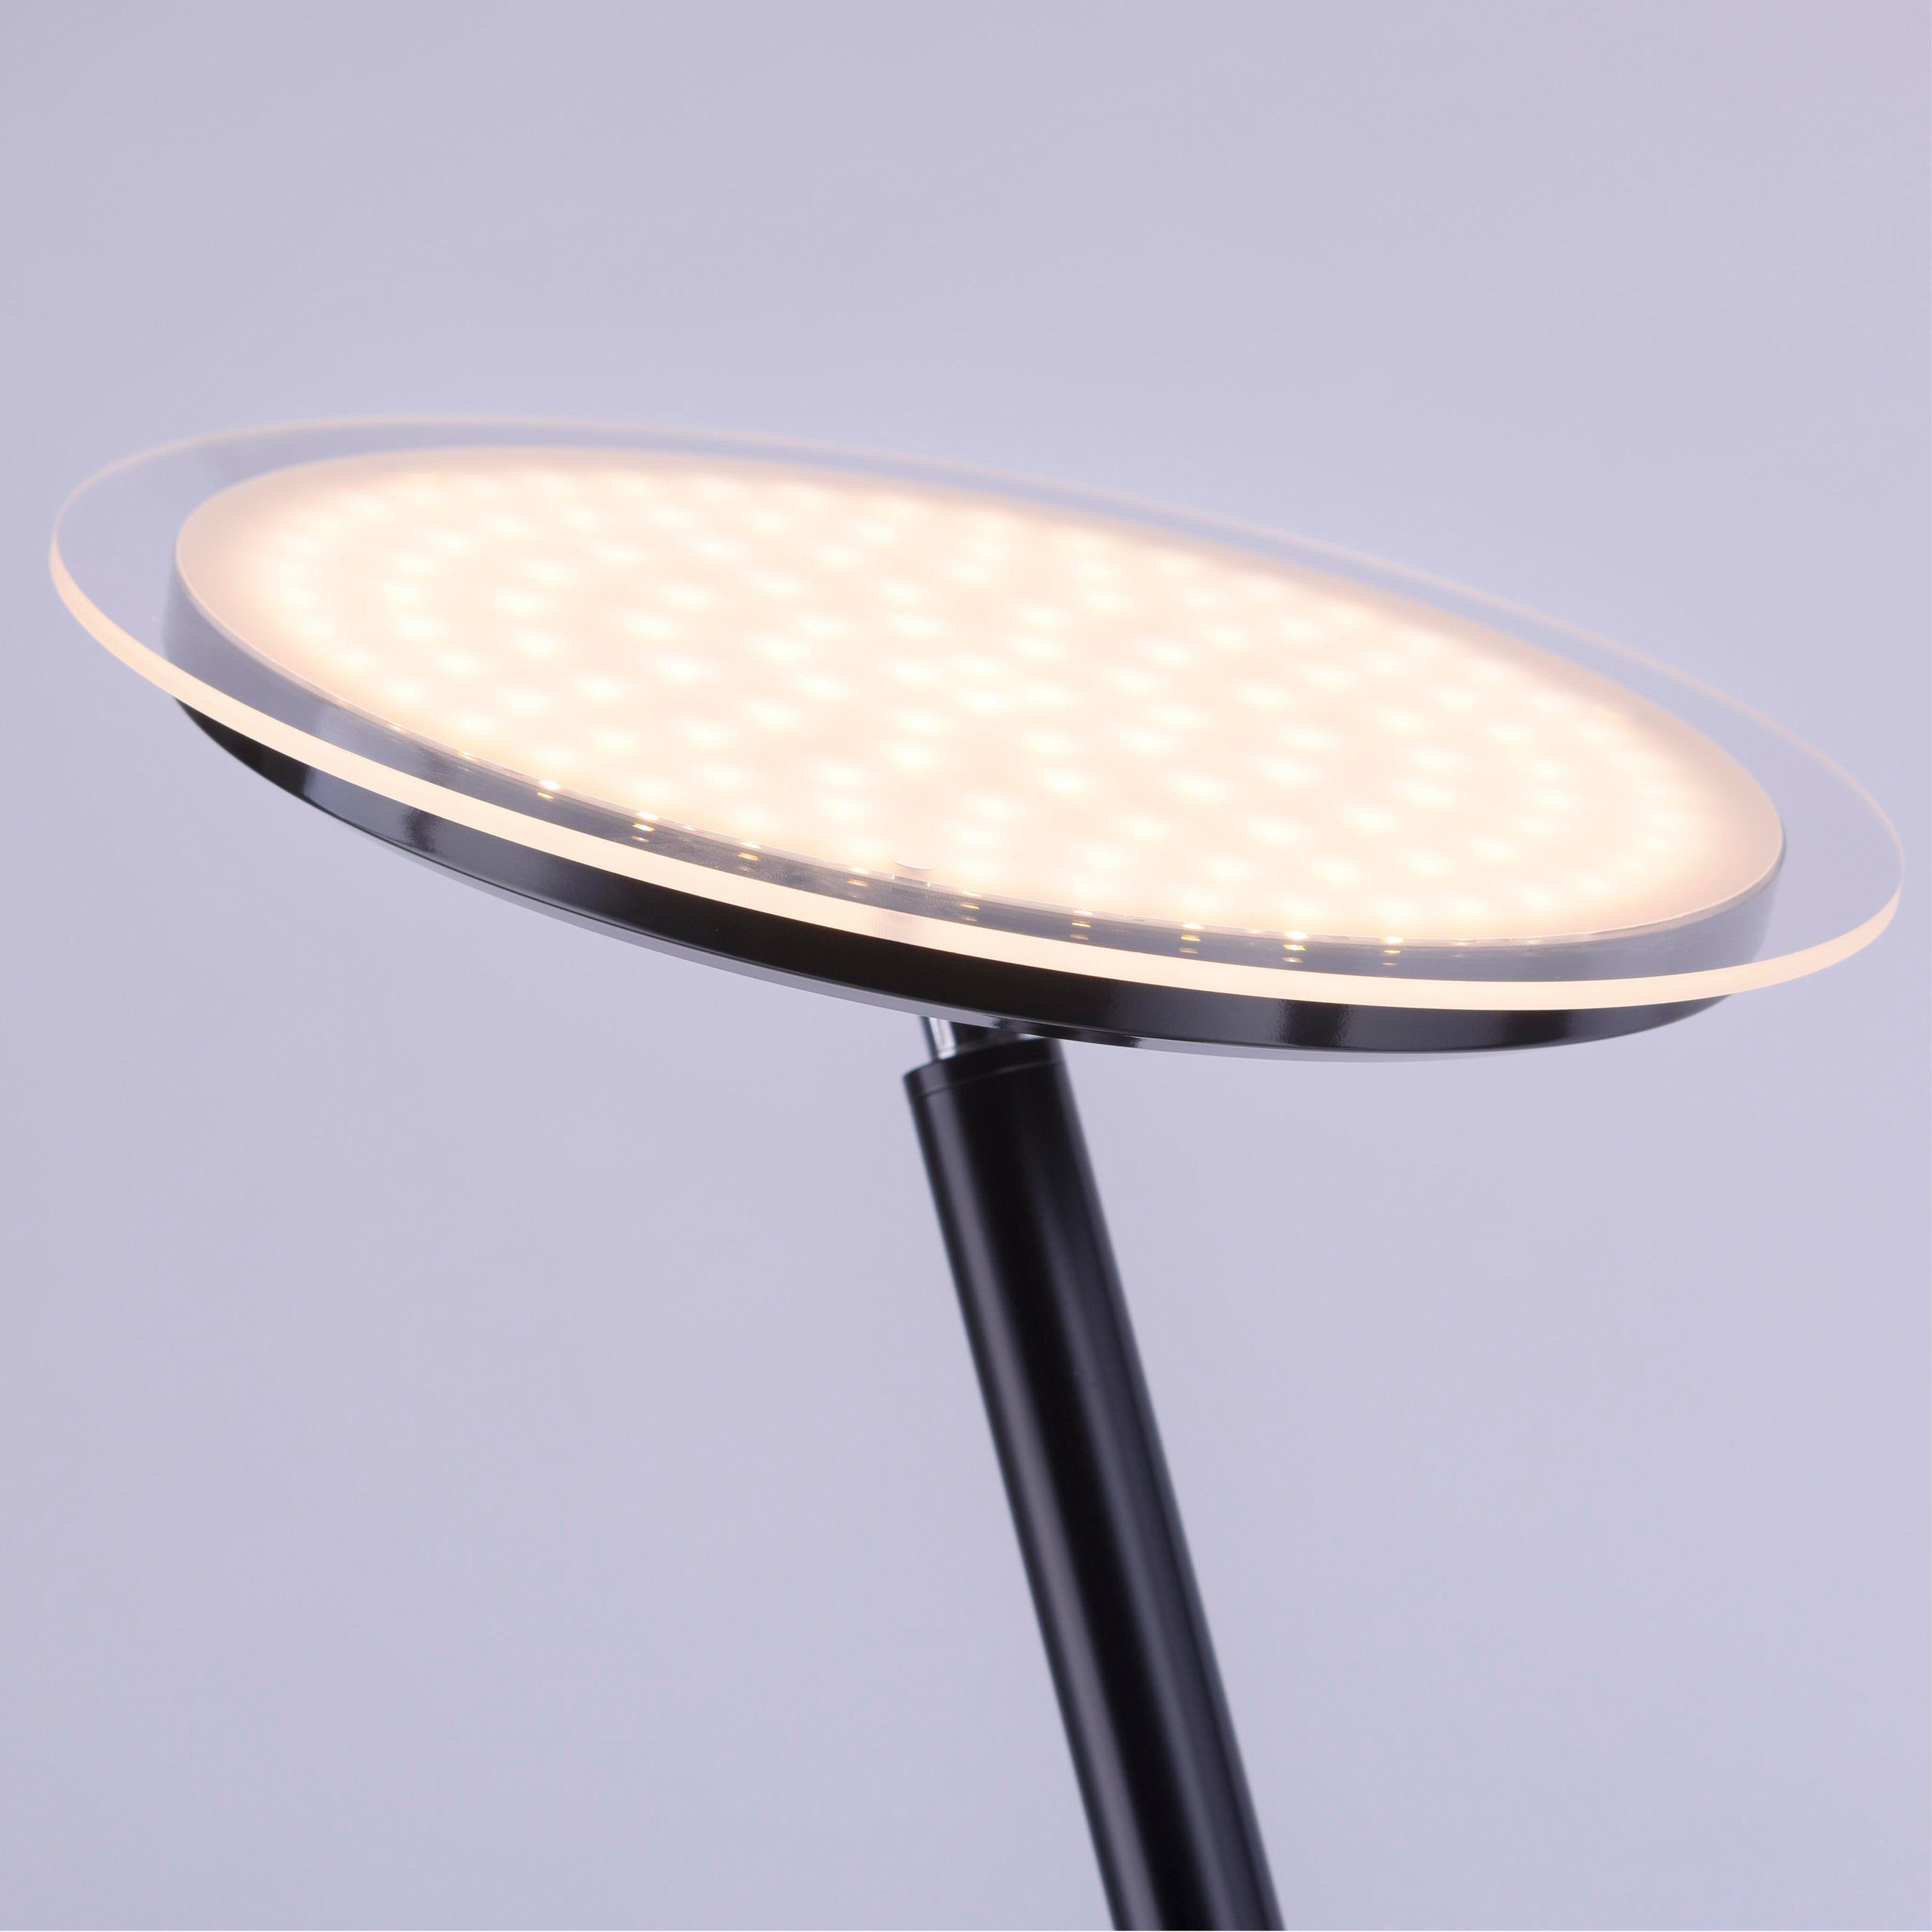 SellTec LED Deckenfluter »Fluter rund«, dimmbar über Touchdimmer,  1xLED-Board / 22 Watt, warmweiß, schwarz, dimmbar über Touchdimmer,  platzsparend